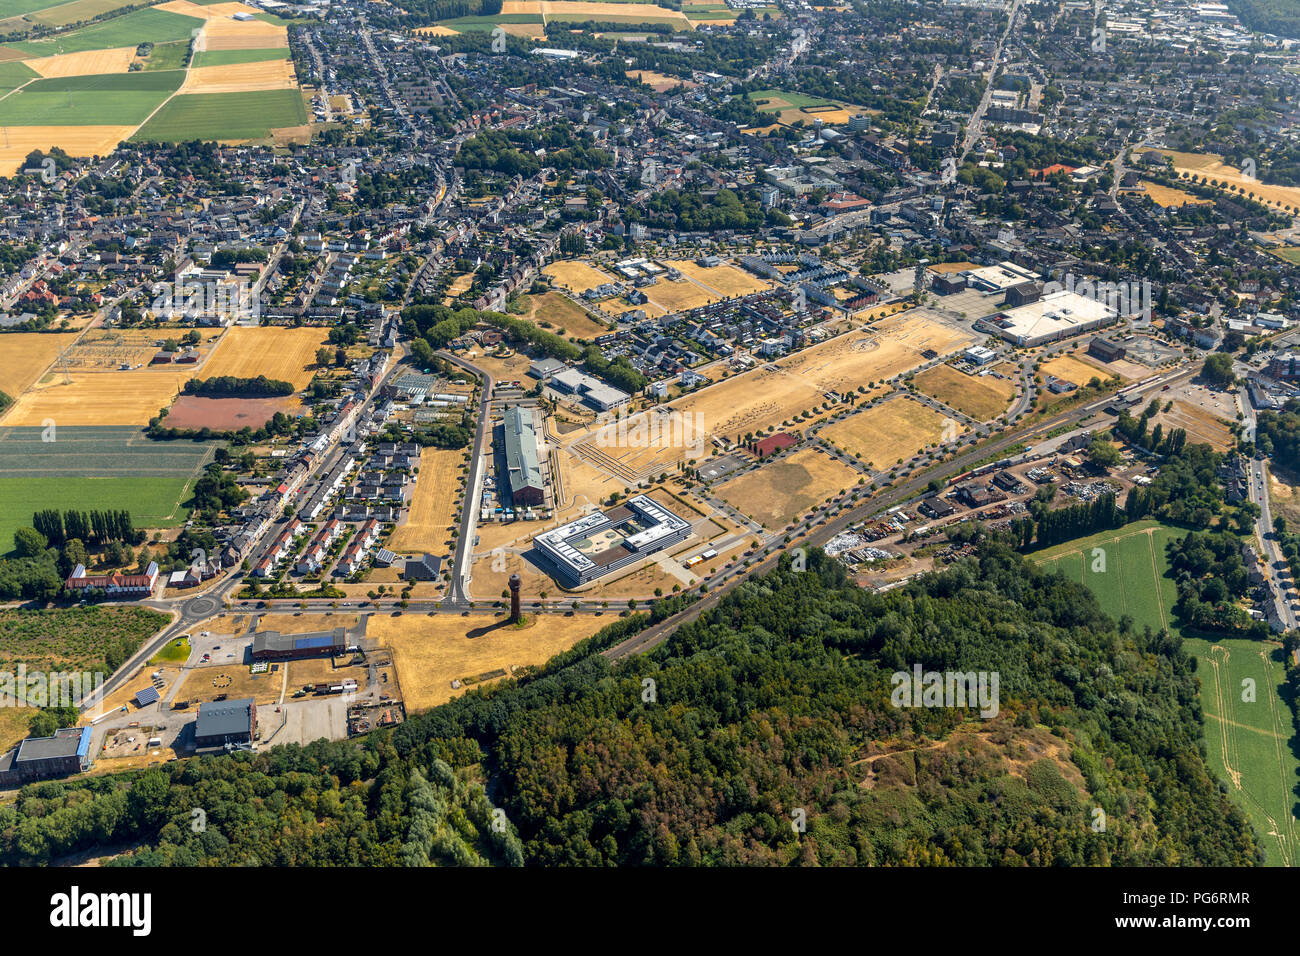 Industrial area former colliery Anna, Alsdorf, Rhineland, North Rhine-Westphalia, Germany, DEU, Europe, aerial view, birds-eyes view, aerial view, aer Stock Photo